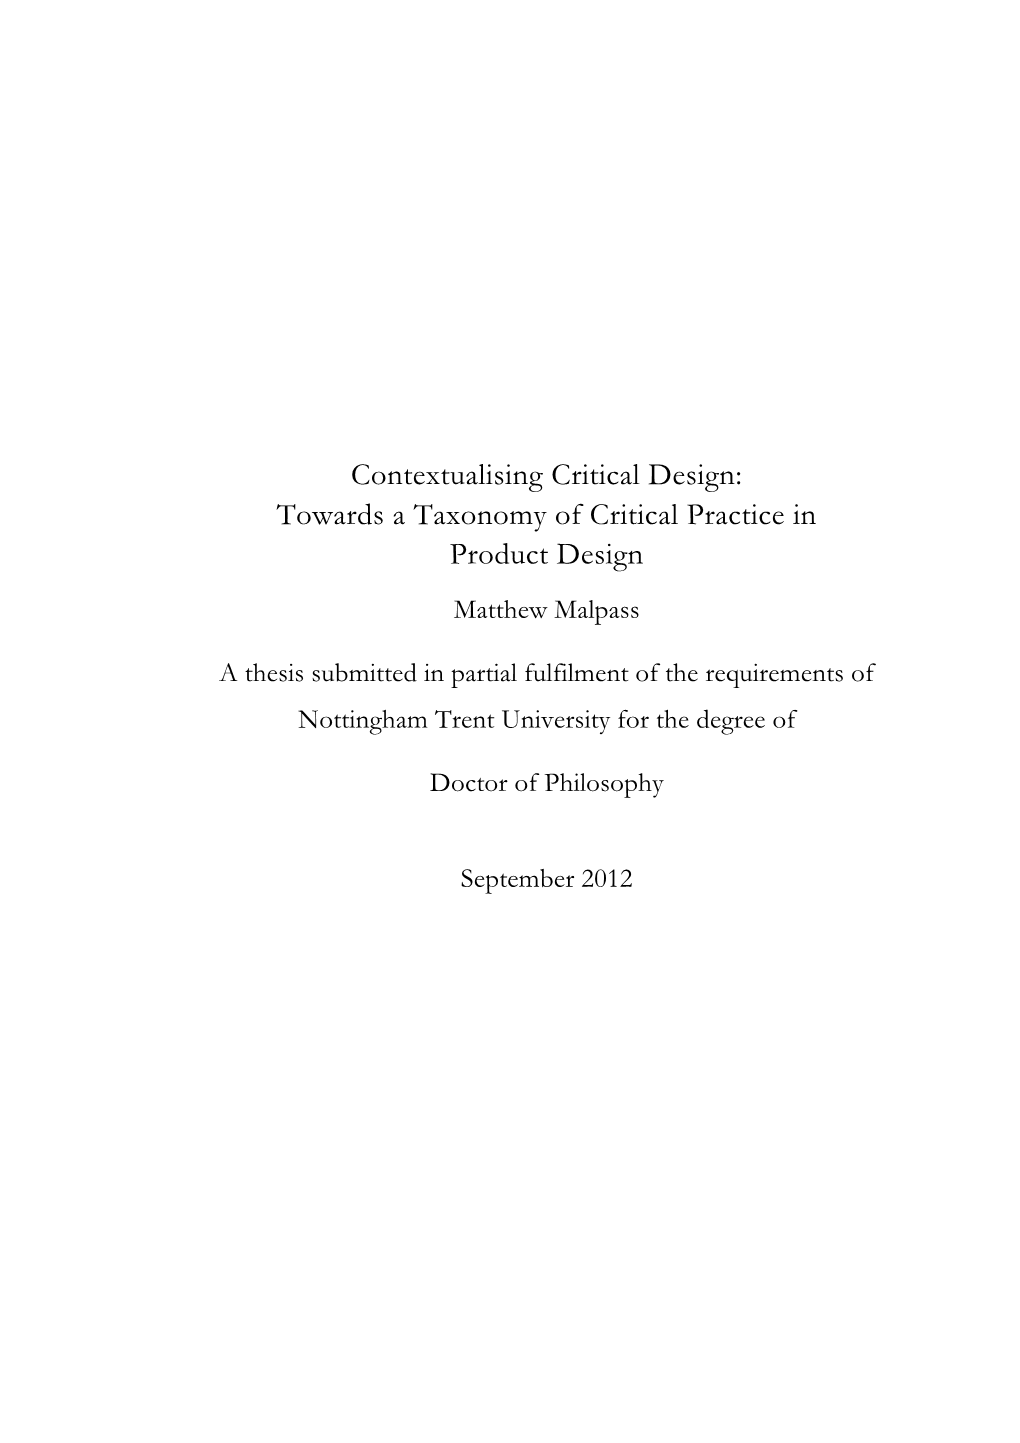 Contextualising Critical Design: Towards a Taxonomy of Critical Practice in Product Design Matthew Malpass